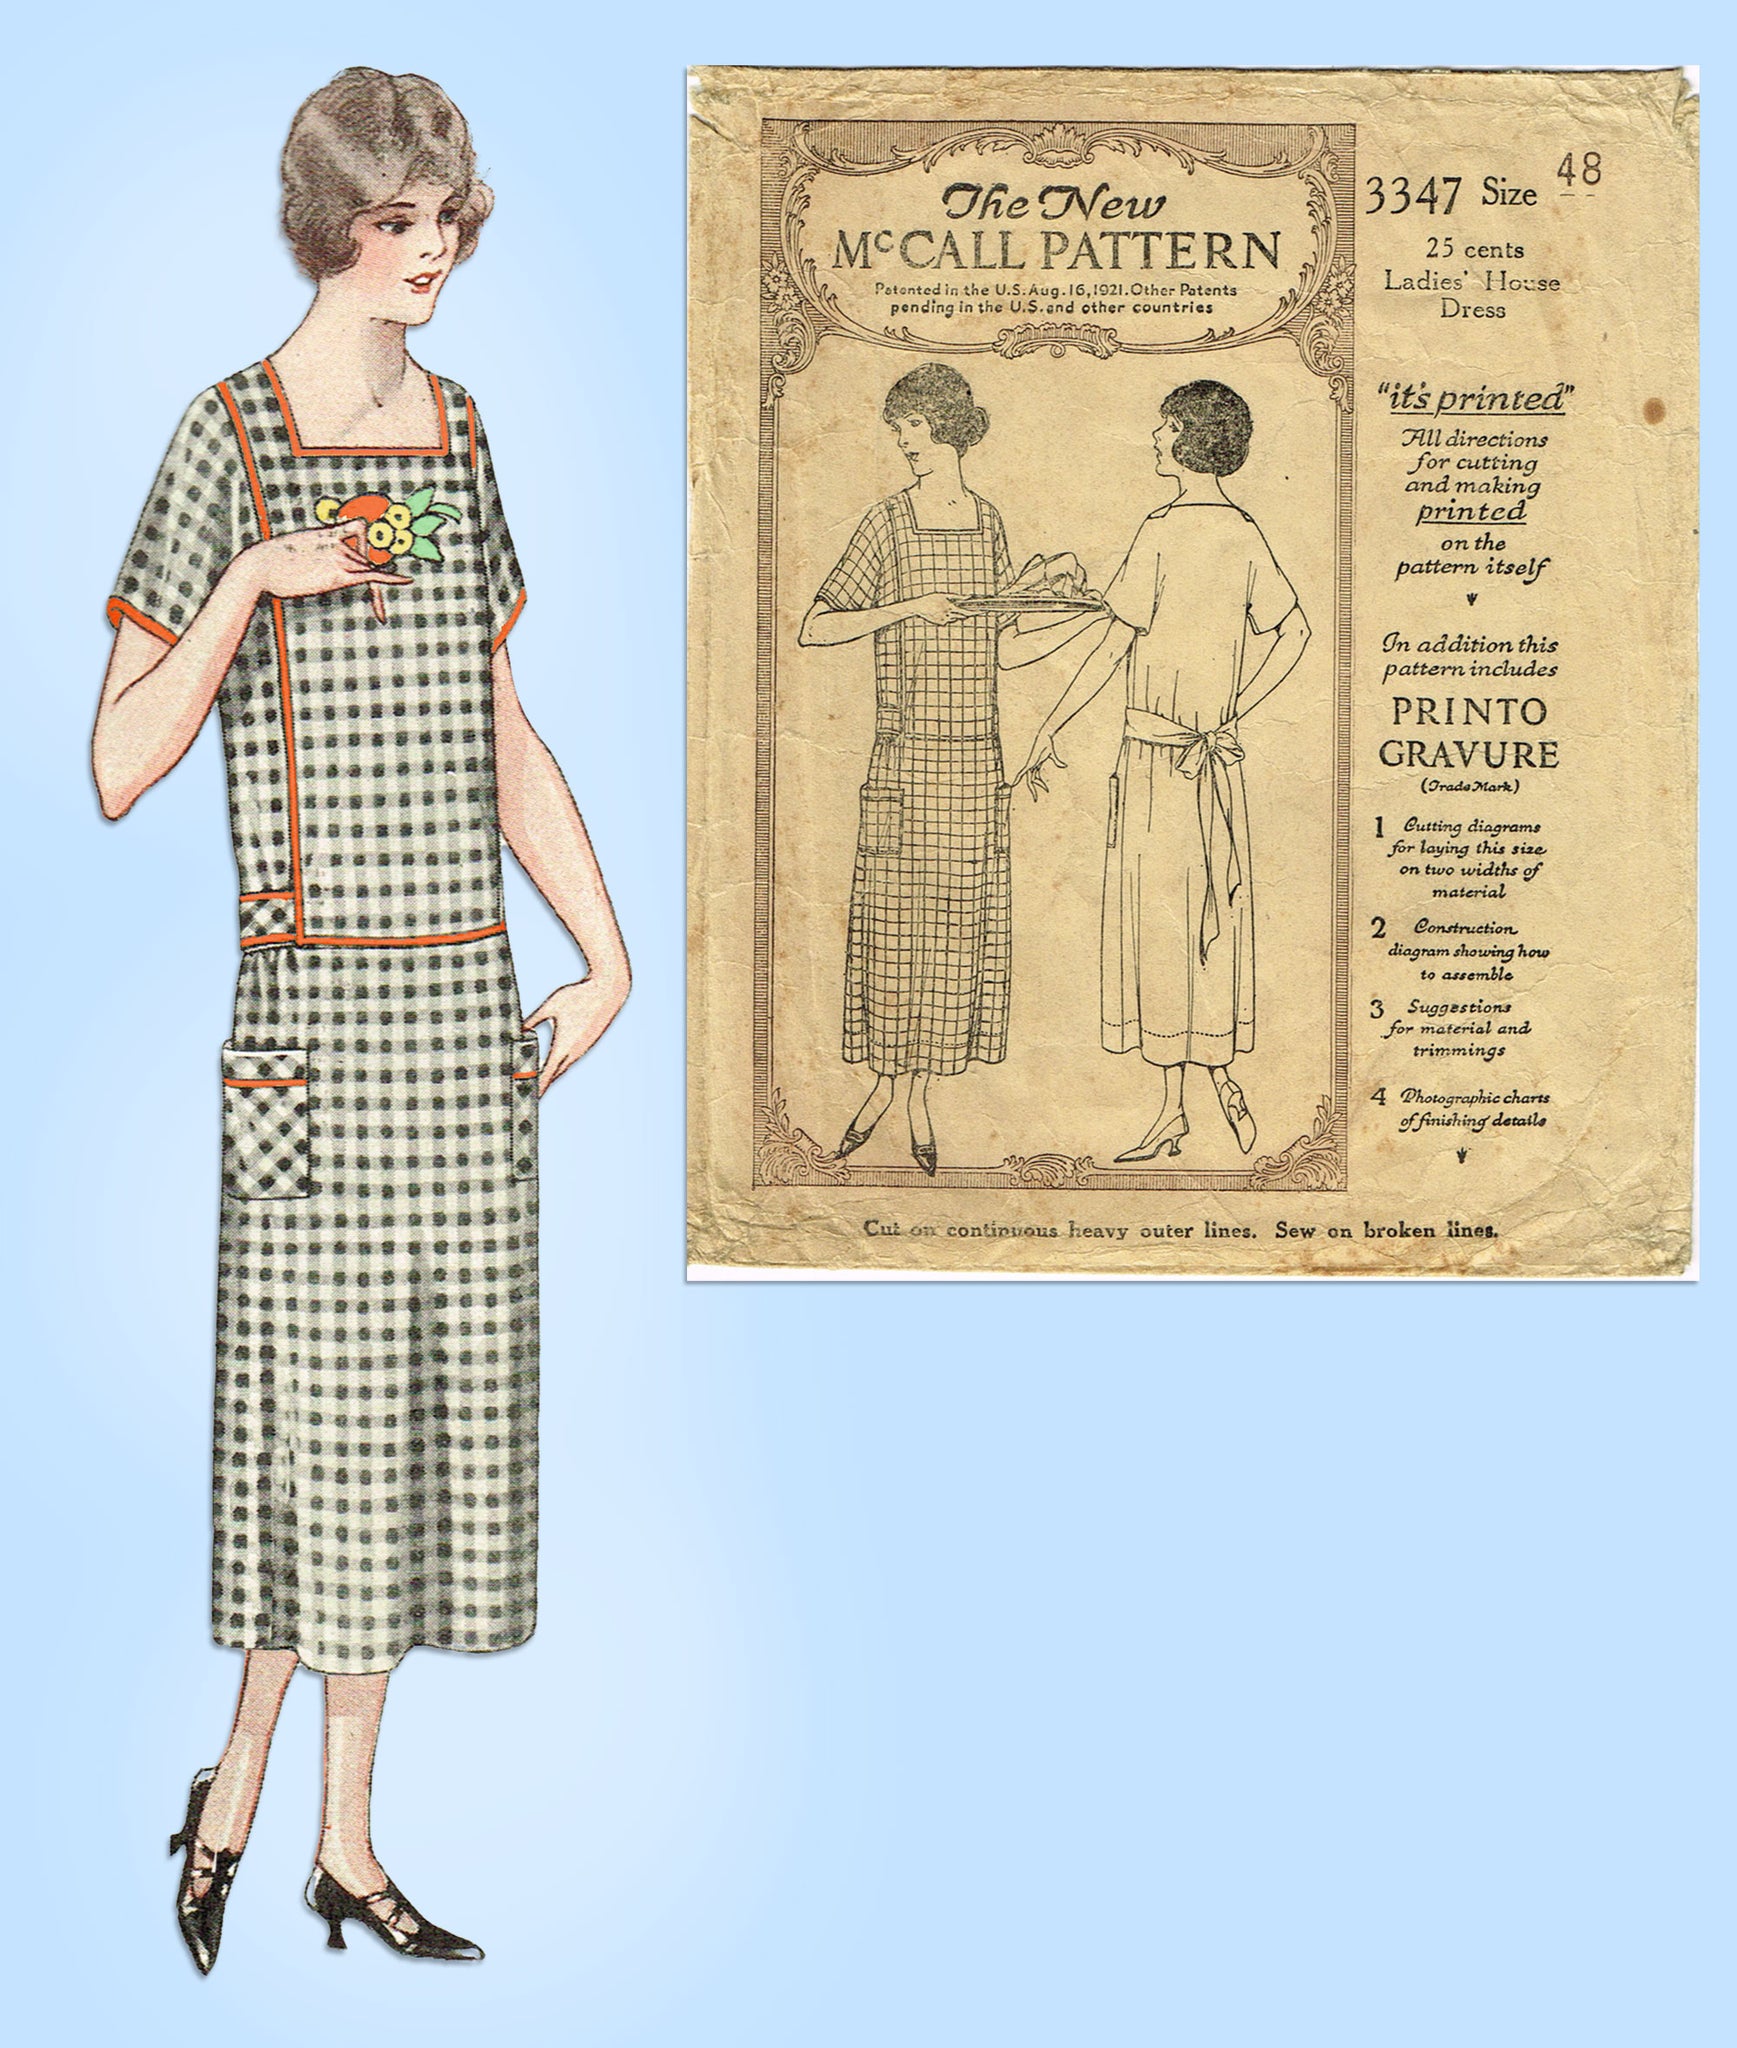 McCall's M5292 Dress Size: B 12-14-16-18 Used Sewing Pattern